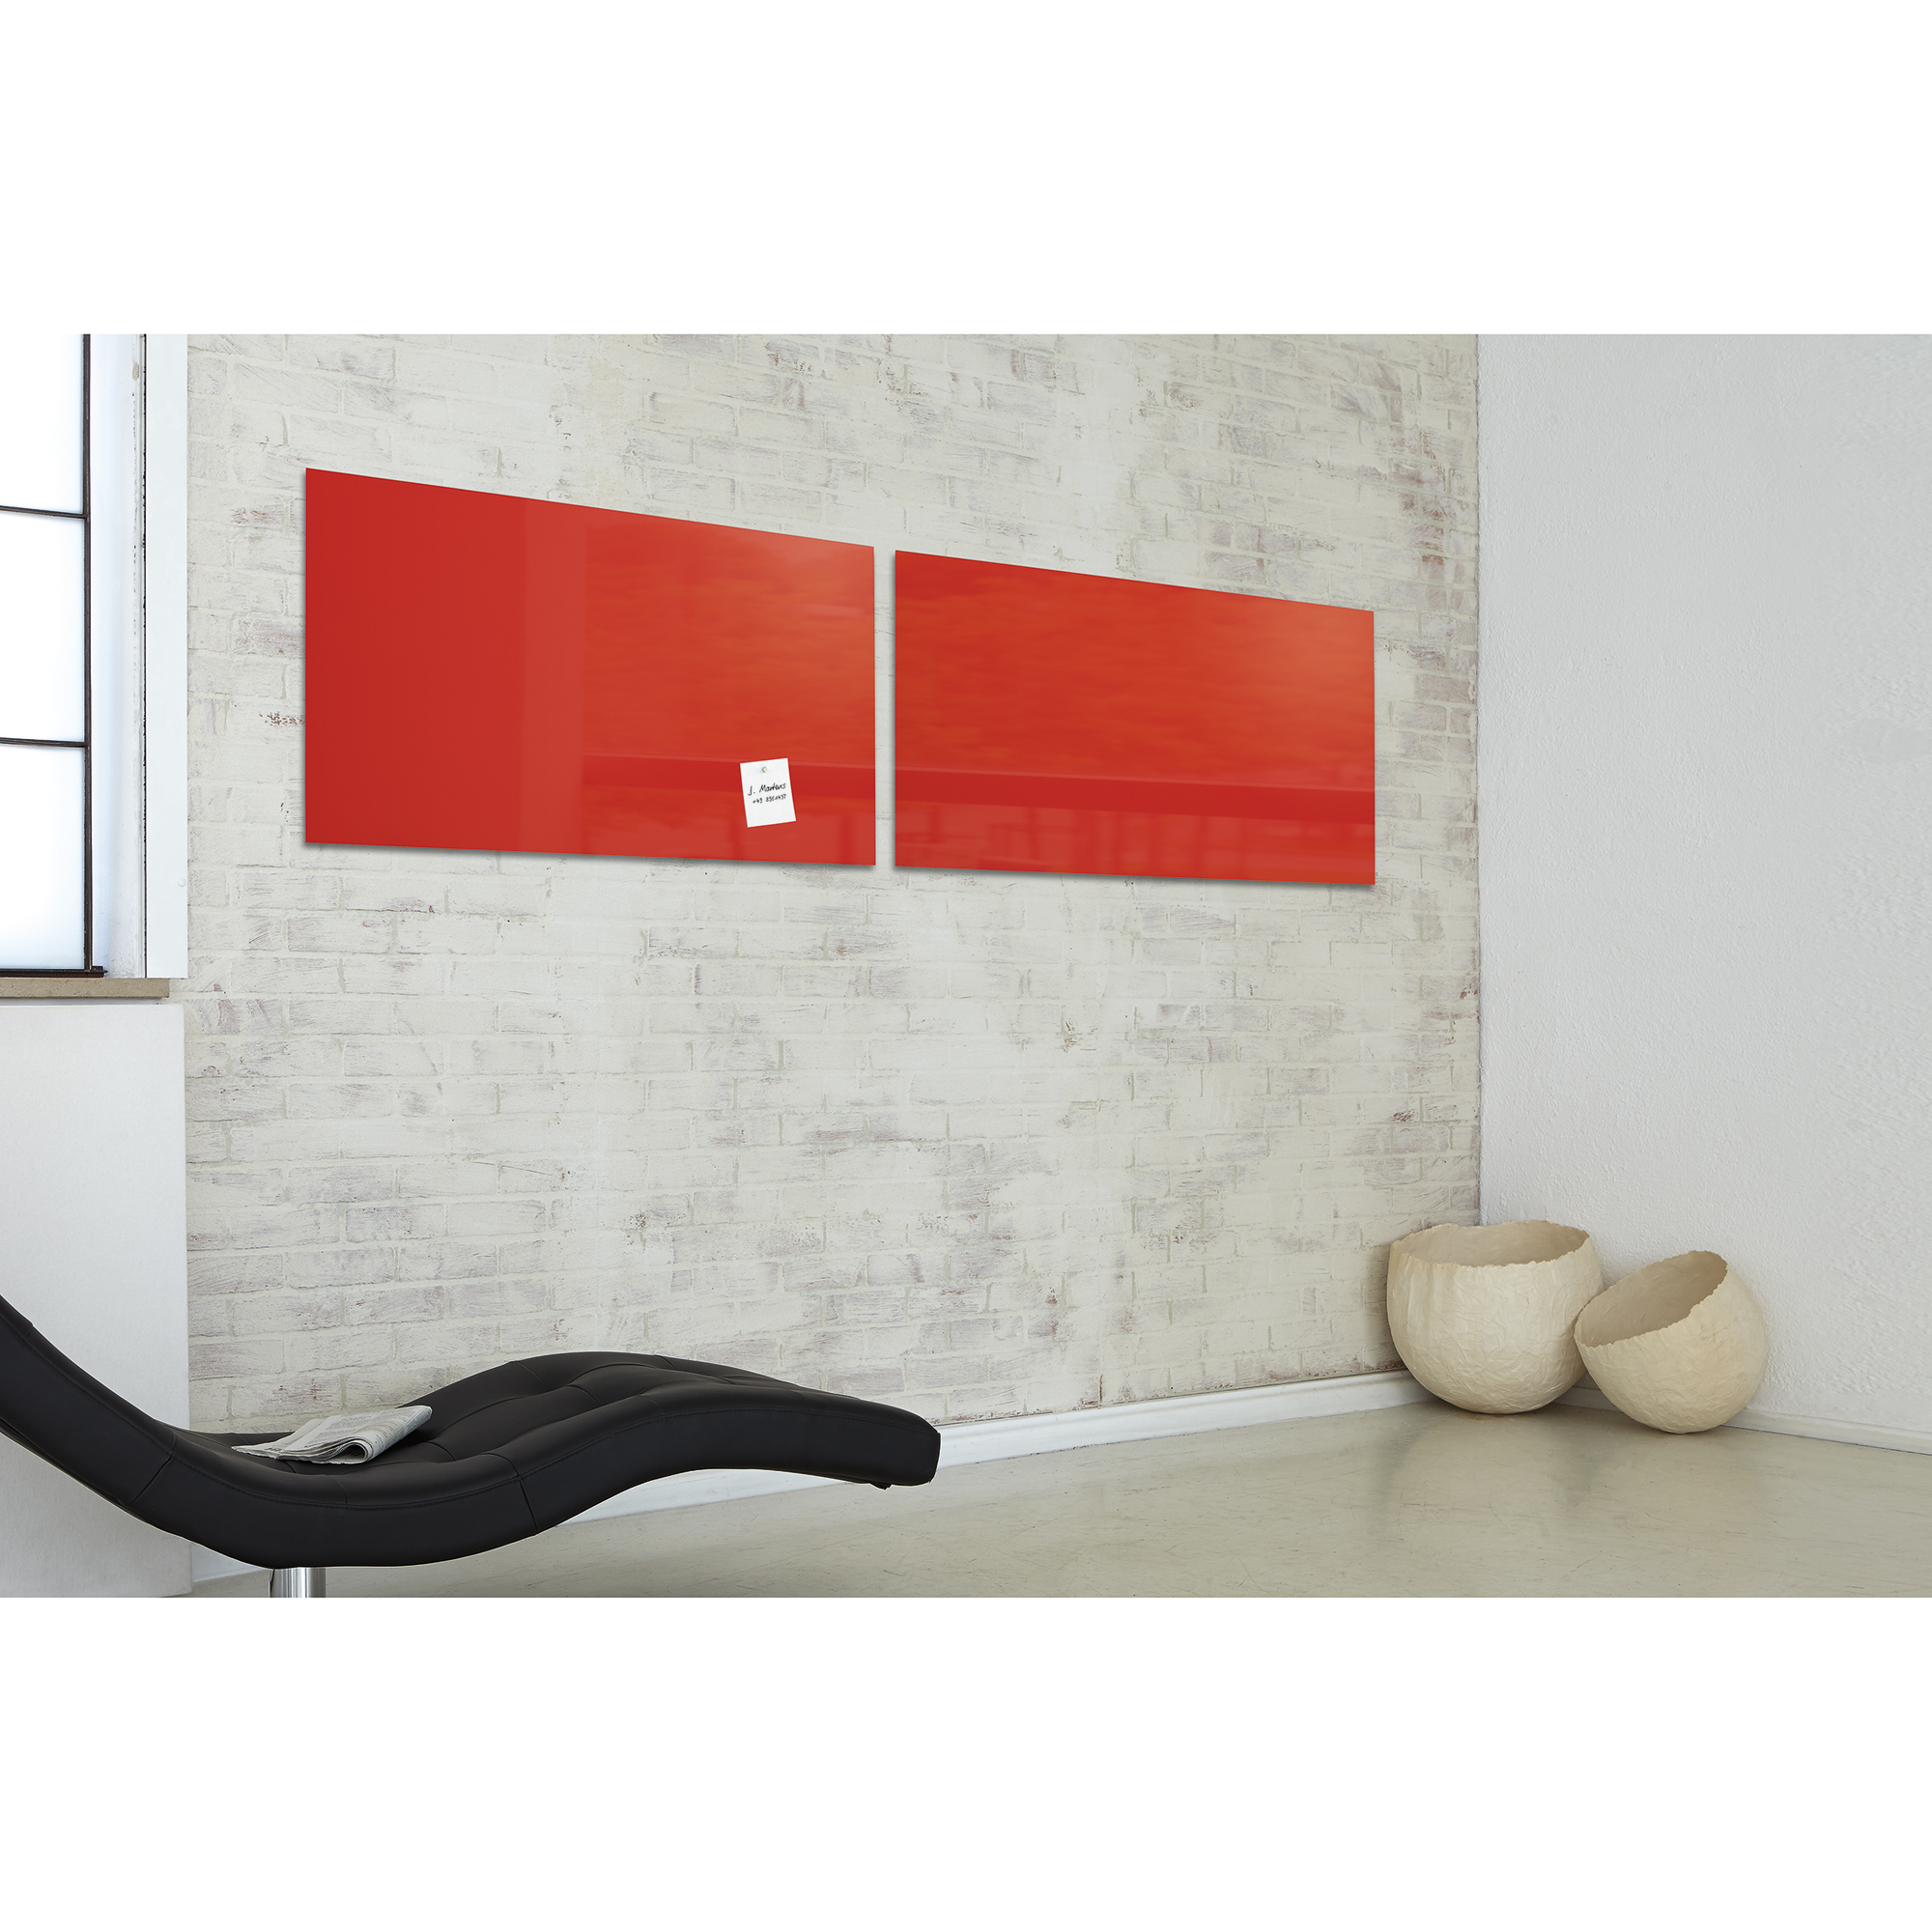 SIGEL Glasboard artverum® 91 x 46 cm rot